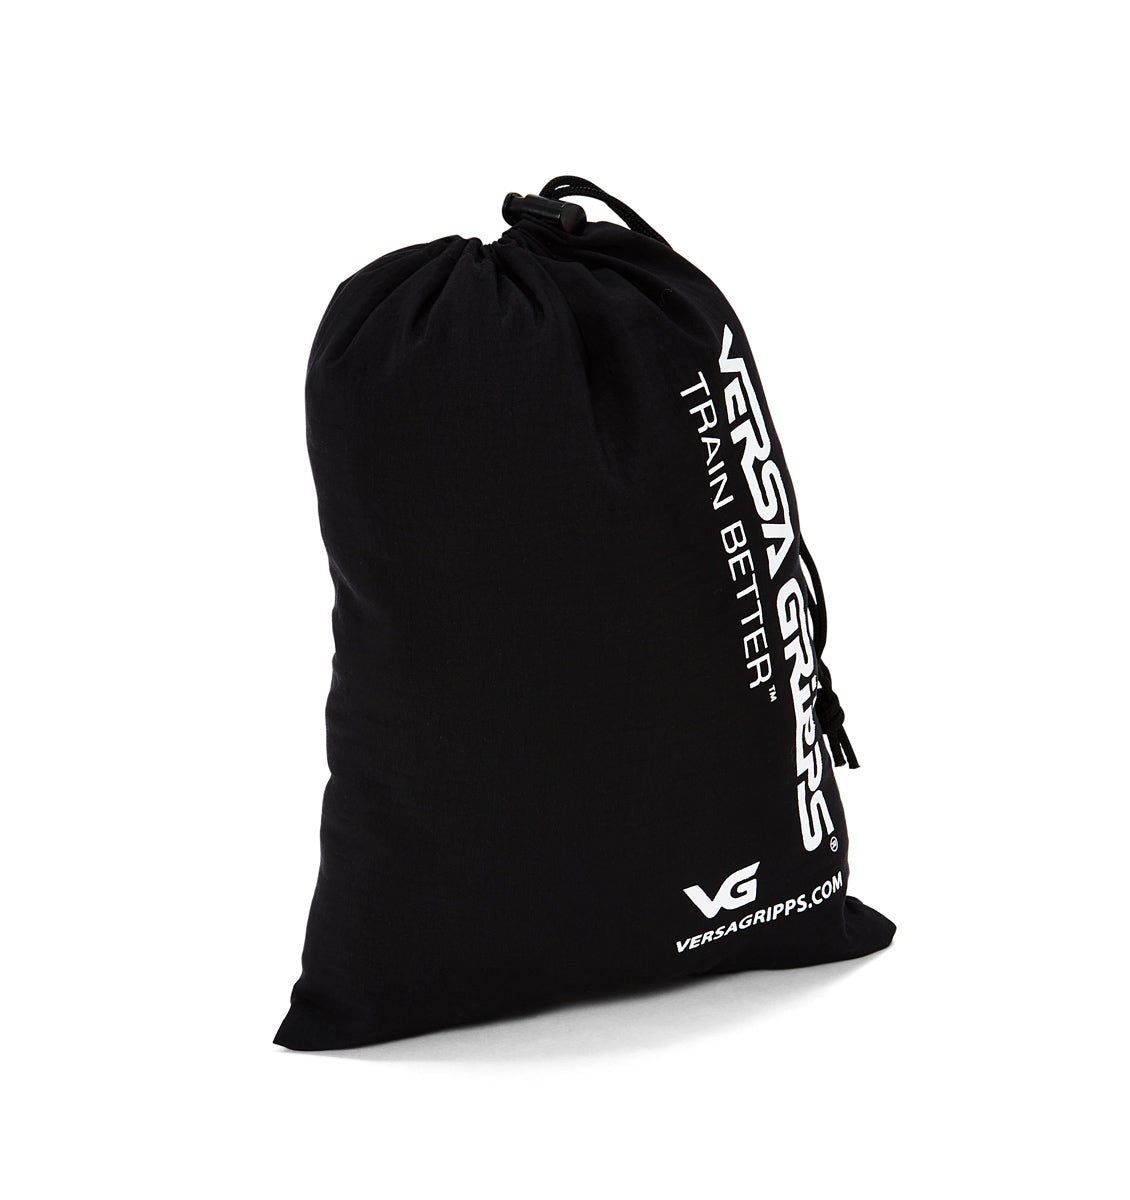 Versa Gripps Breathable 100% Taslan VG Stuffsak Bag Black Side